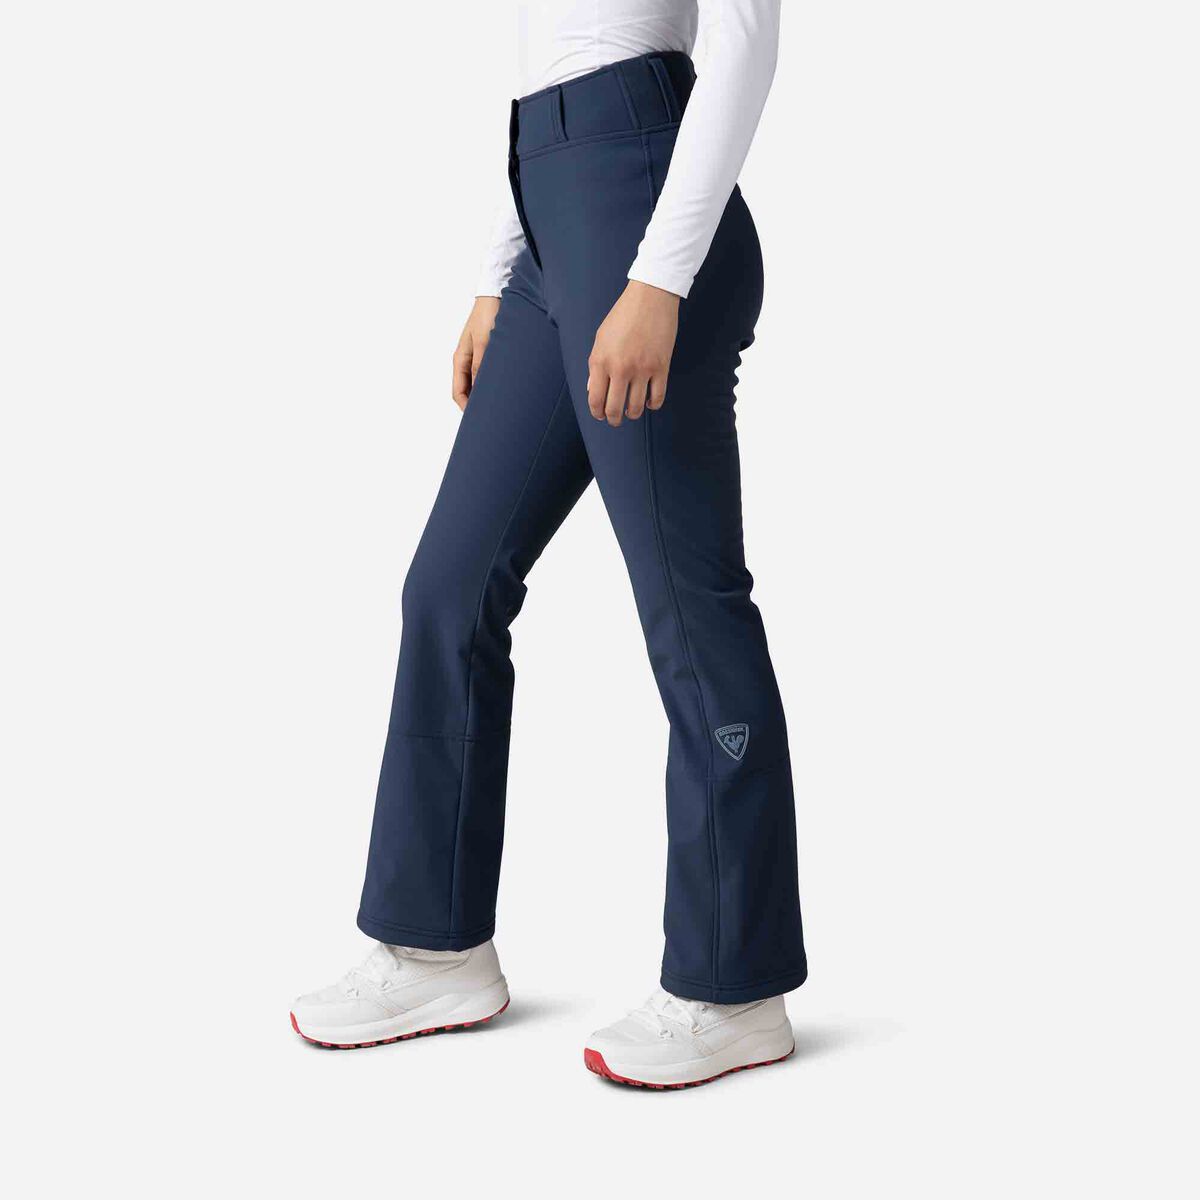 Rossignol Women's Soft Shell Ski pants Blue